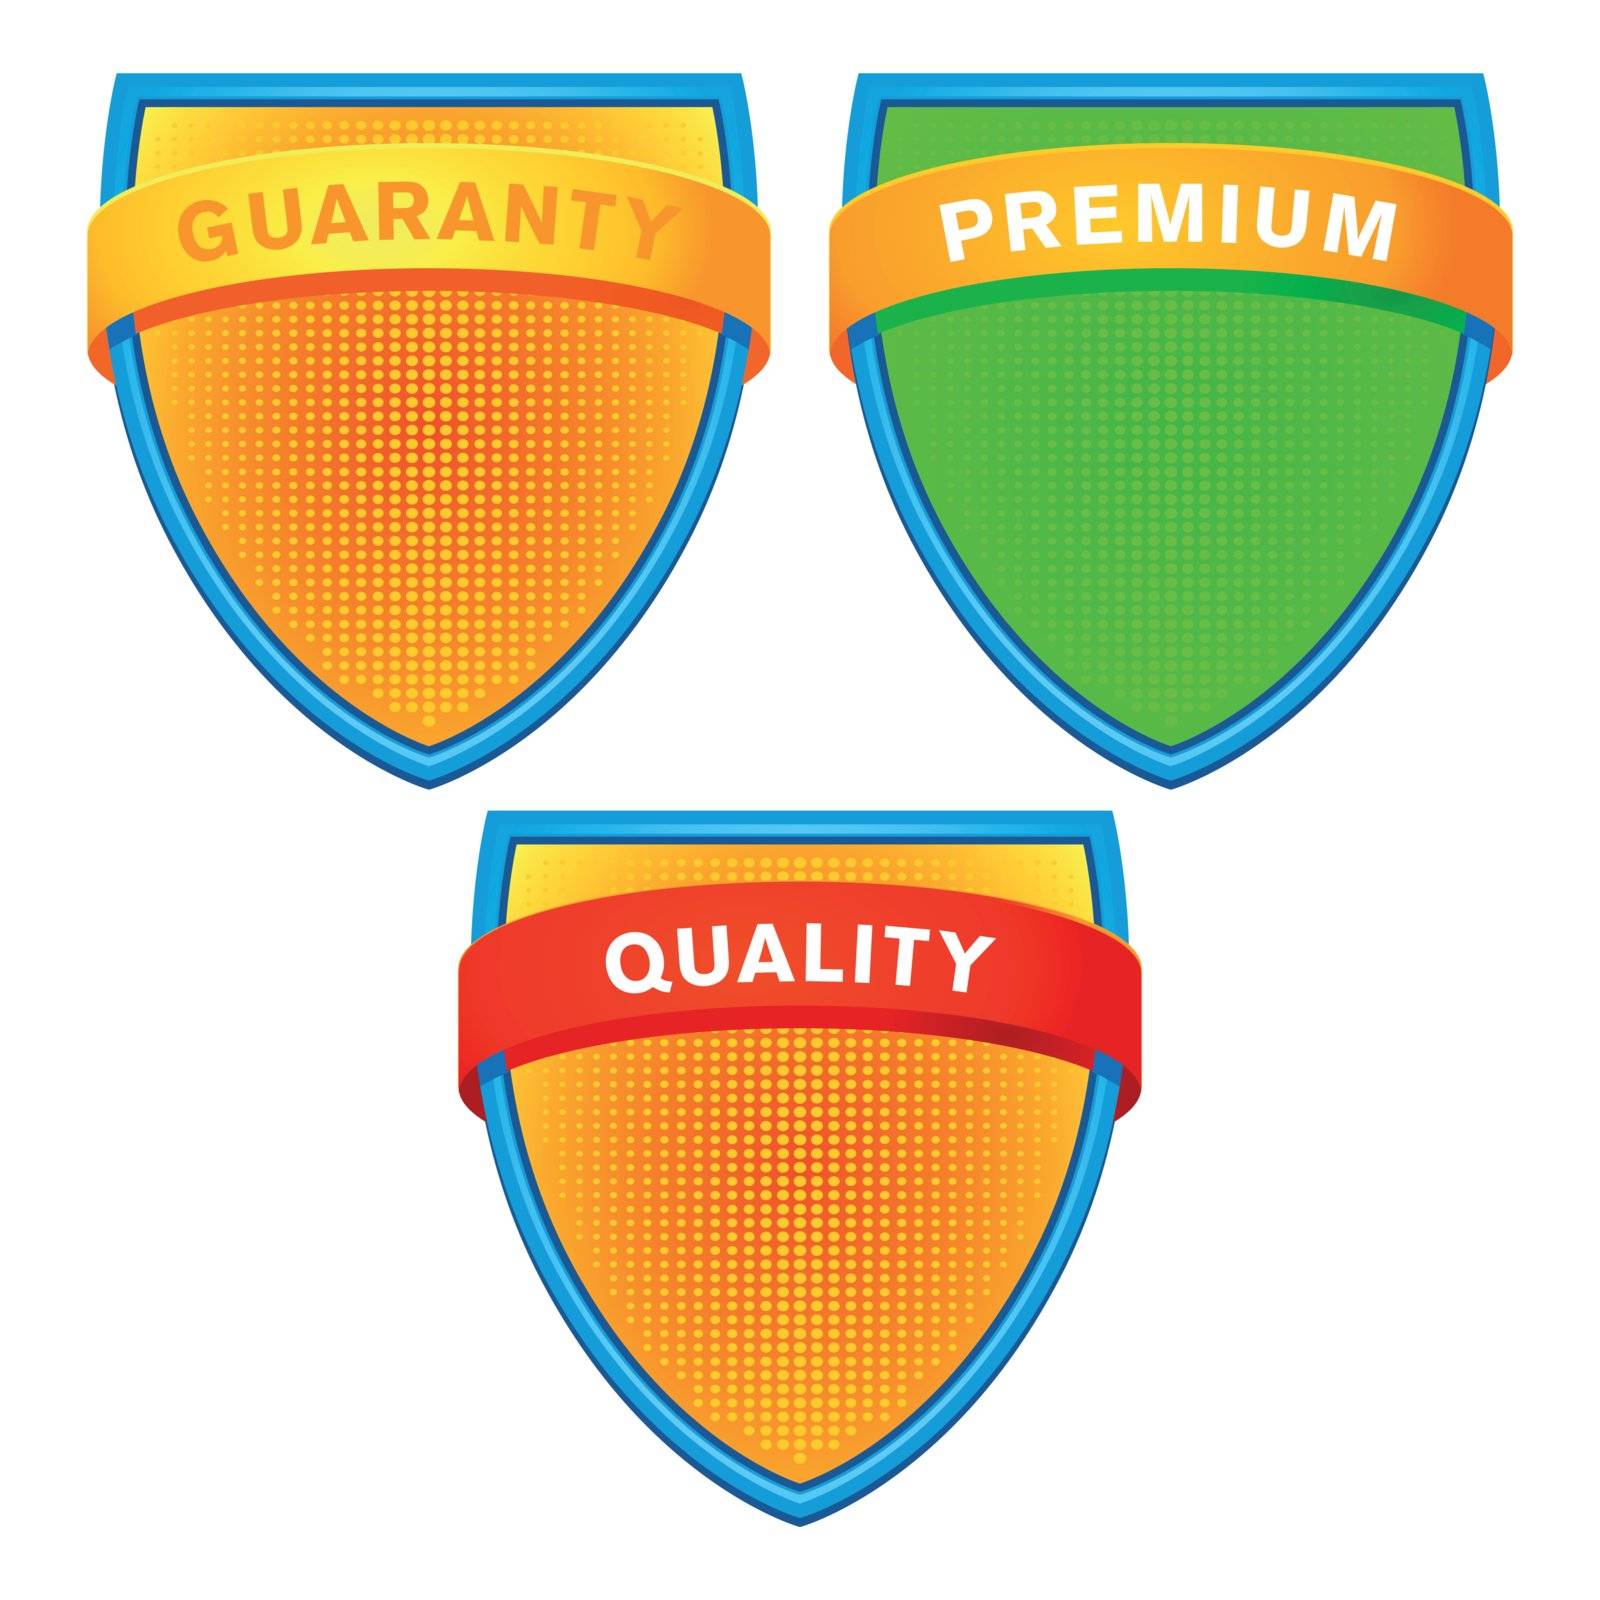 guaranty emblem by scusi